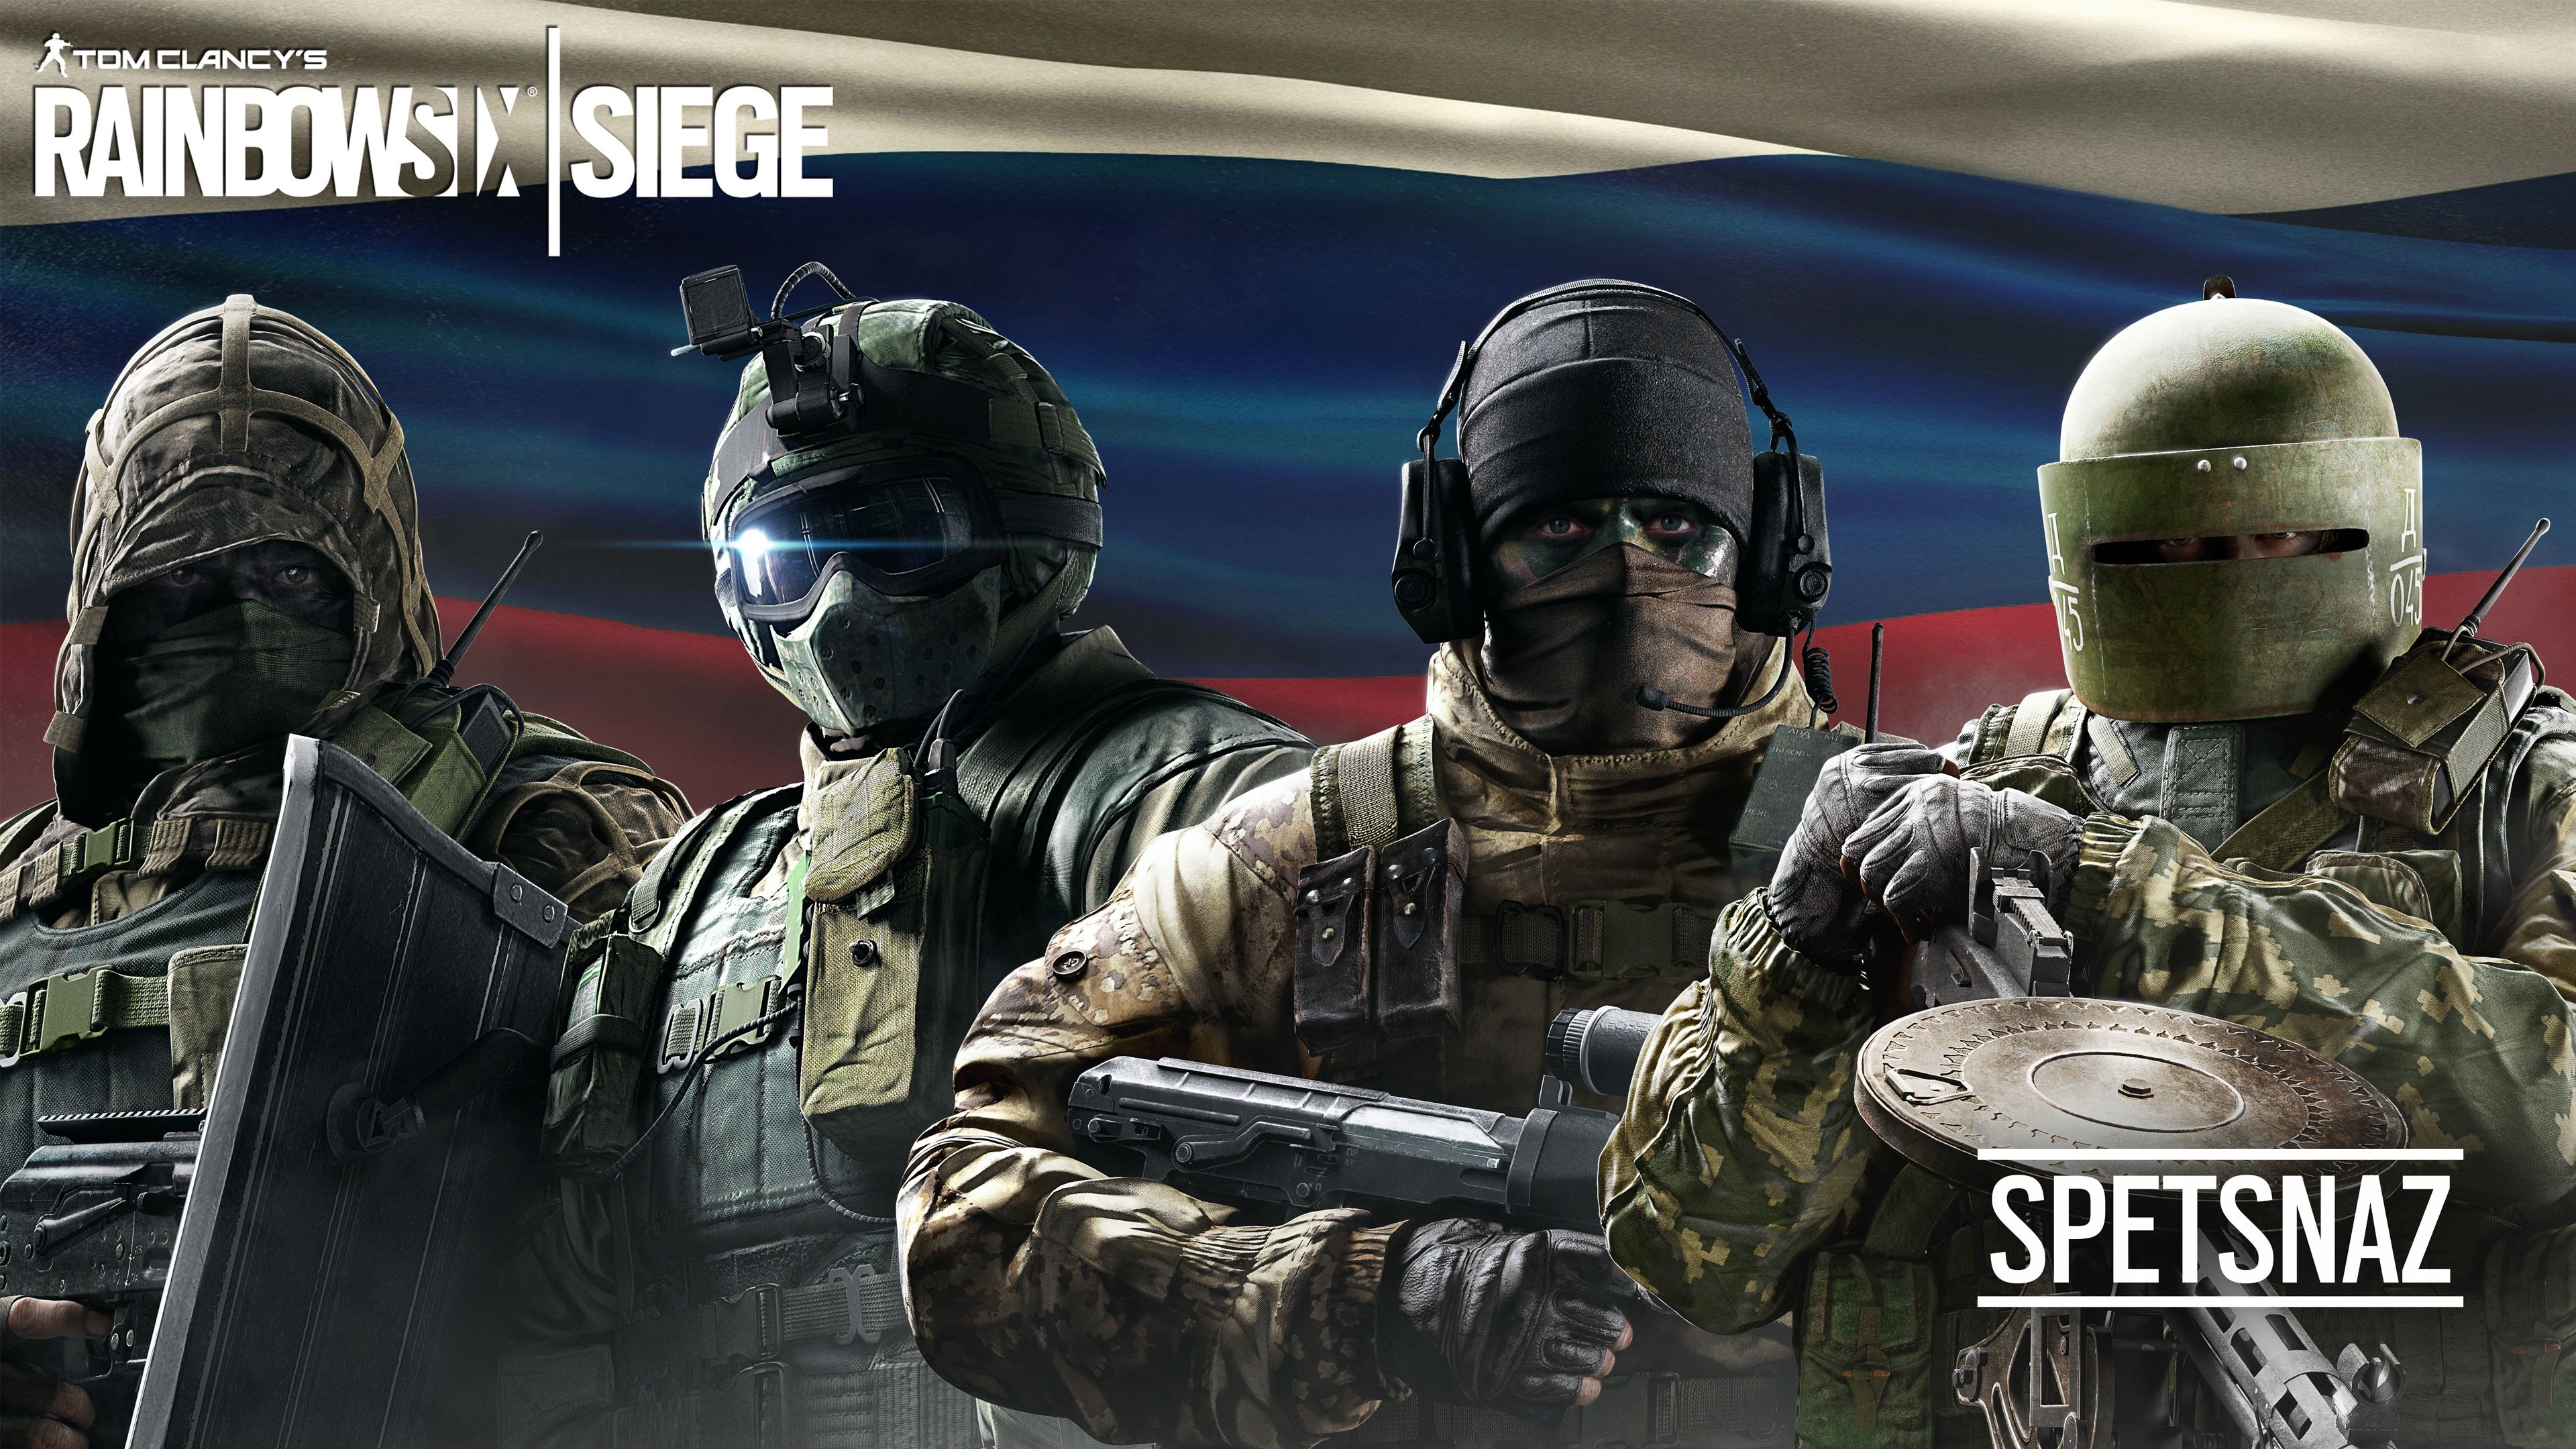 Tom Clancy's Rainbow Six Siege Spetsnaz Wallpaper in jpg format for free download